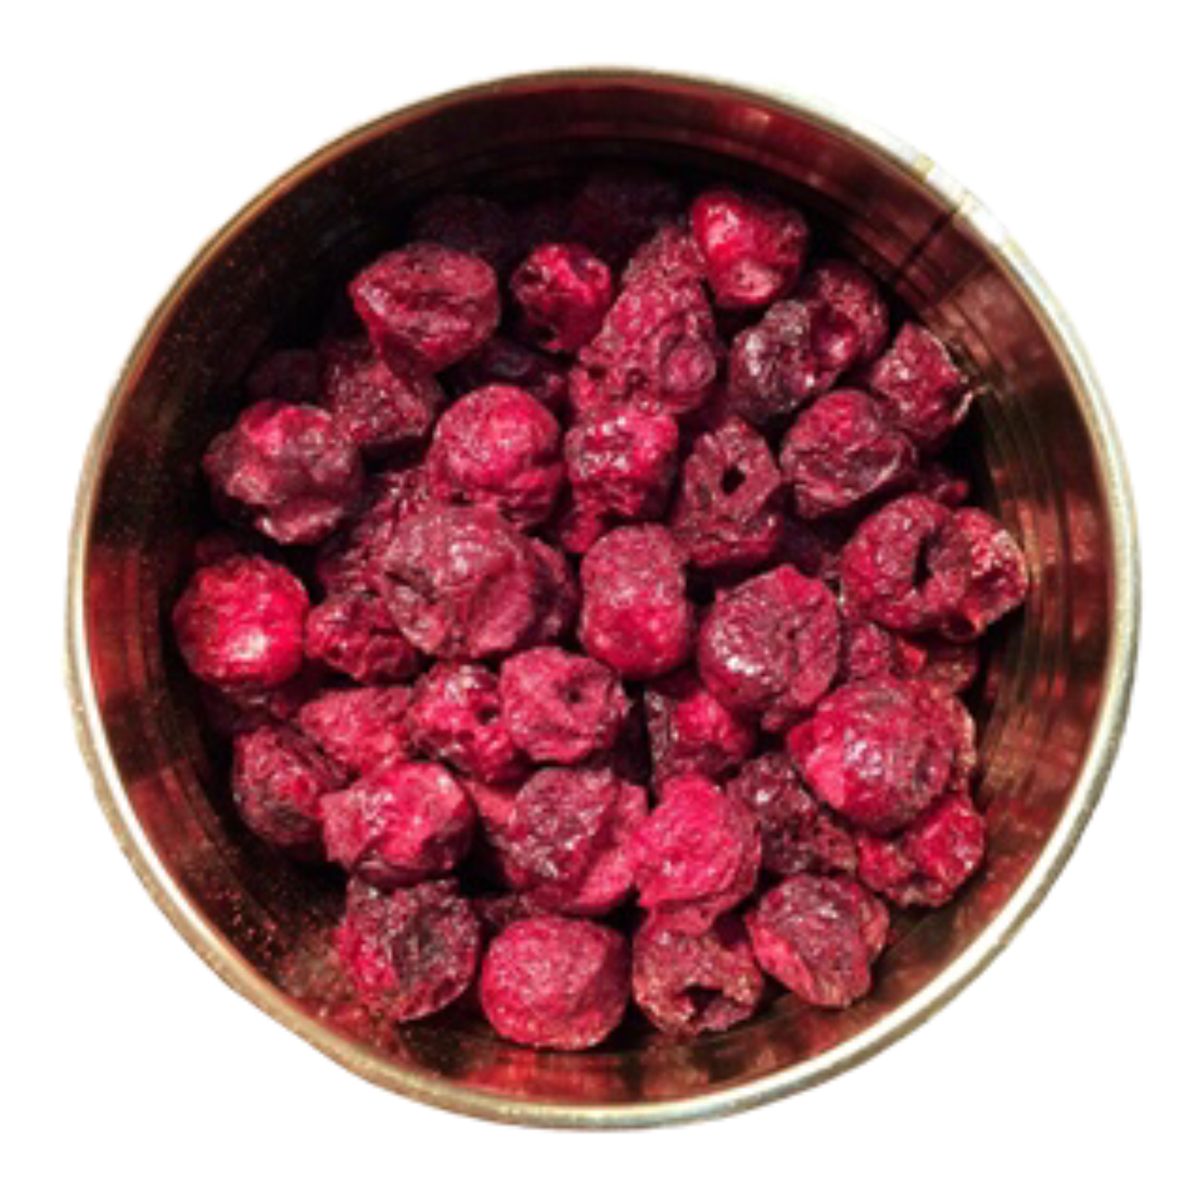 Future Essentials Freeze Dried Whole Tart Cherries